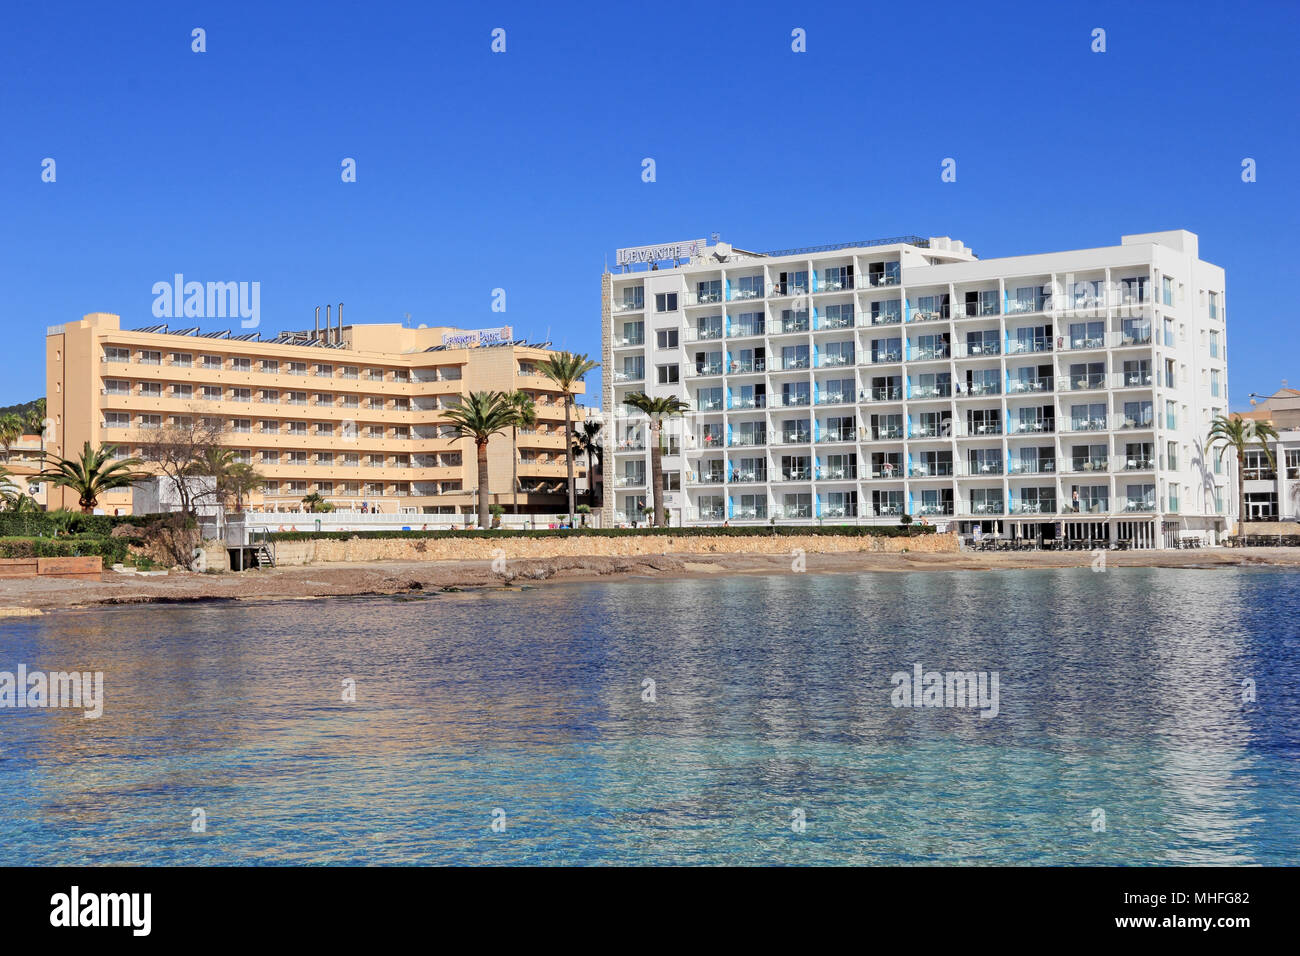 Hotels Levante and Levante Park, Cala Bona, Mallorca Stock Photo - Alamy